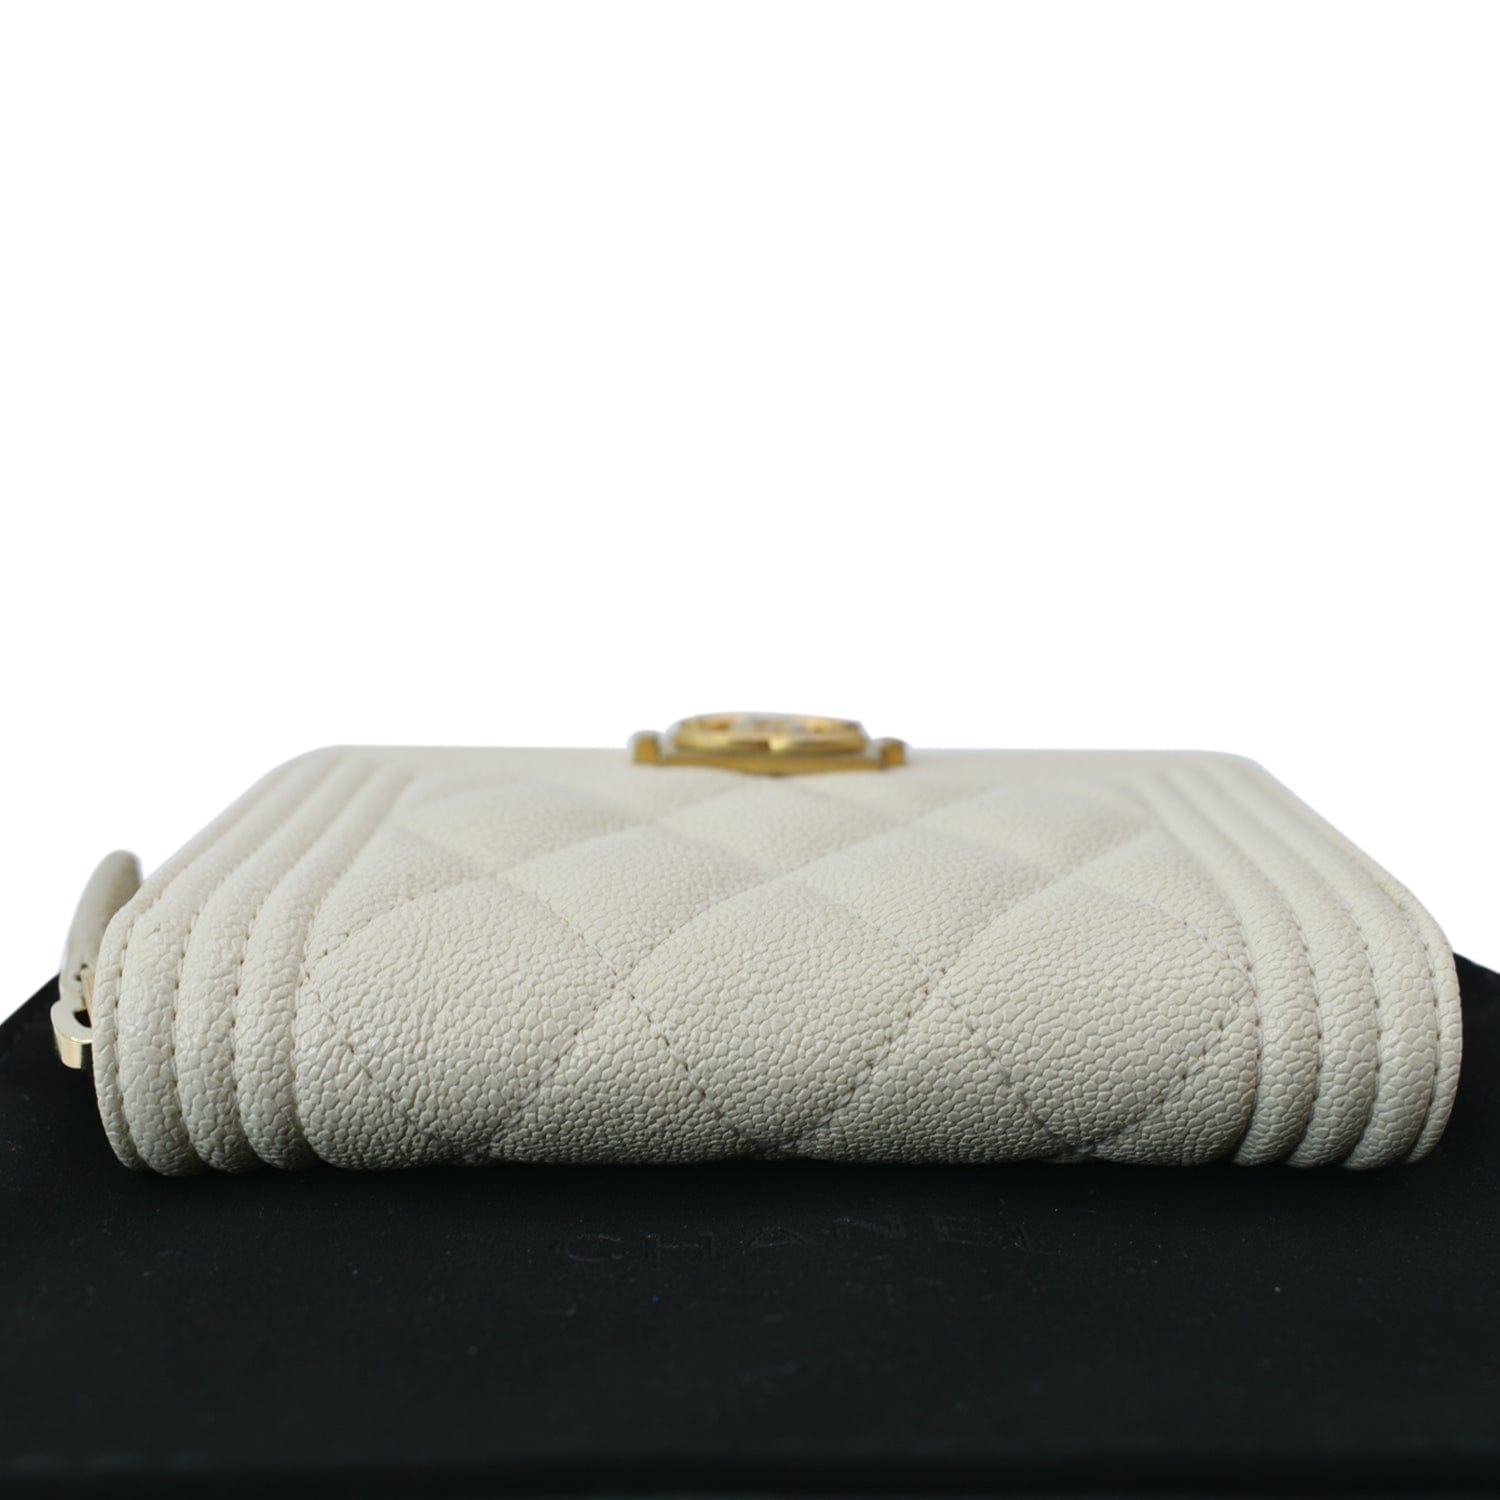 CHANEL, Bags, Chanel Caviar Short Wallet